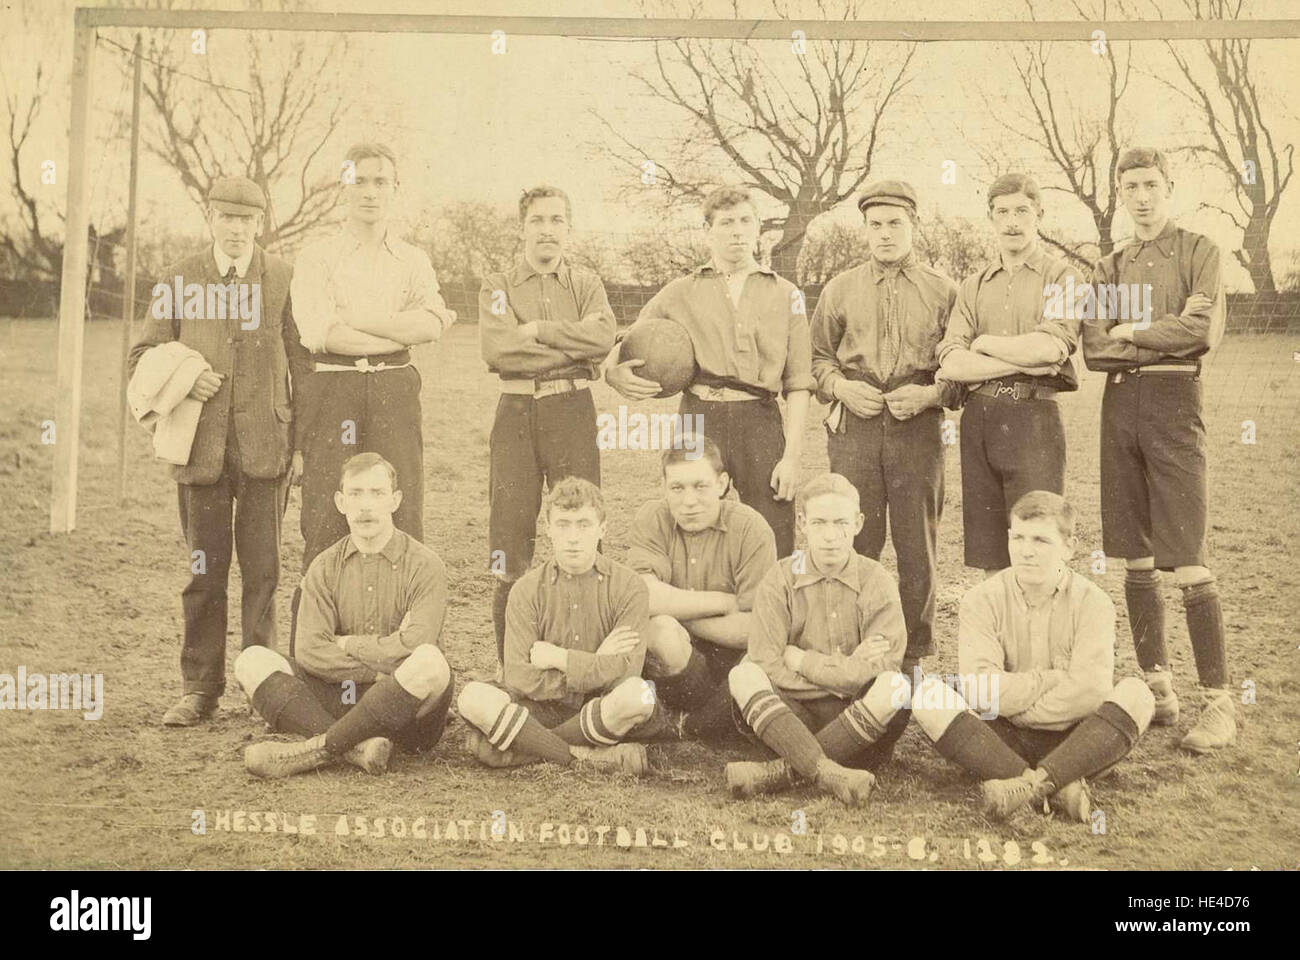 Hessle (East Yorkshire Association Football team 1905-06  DDOW-2-11 Stock Photo